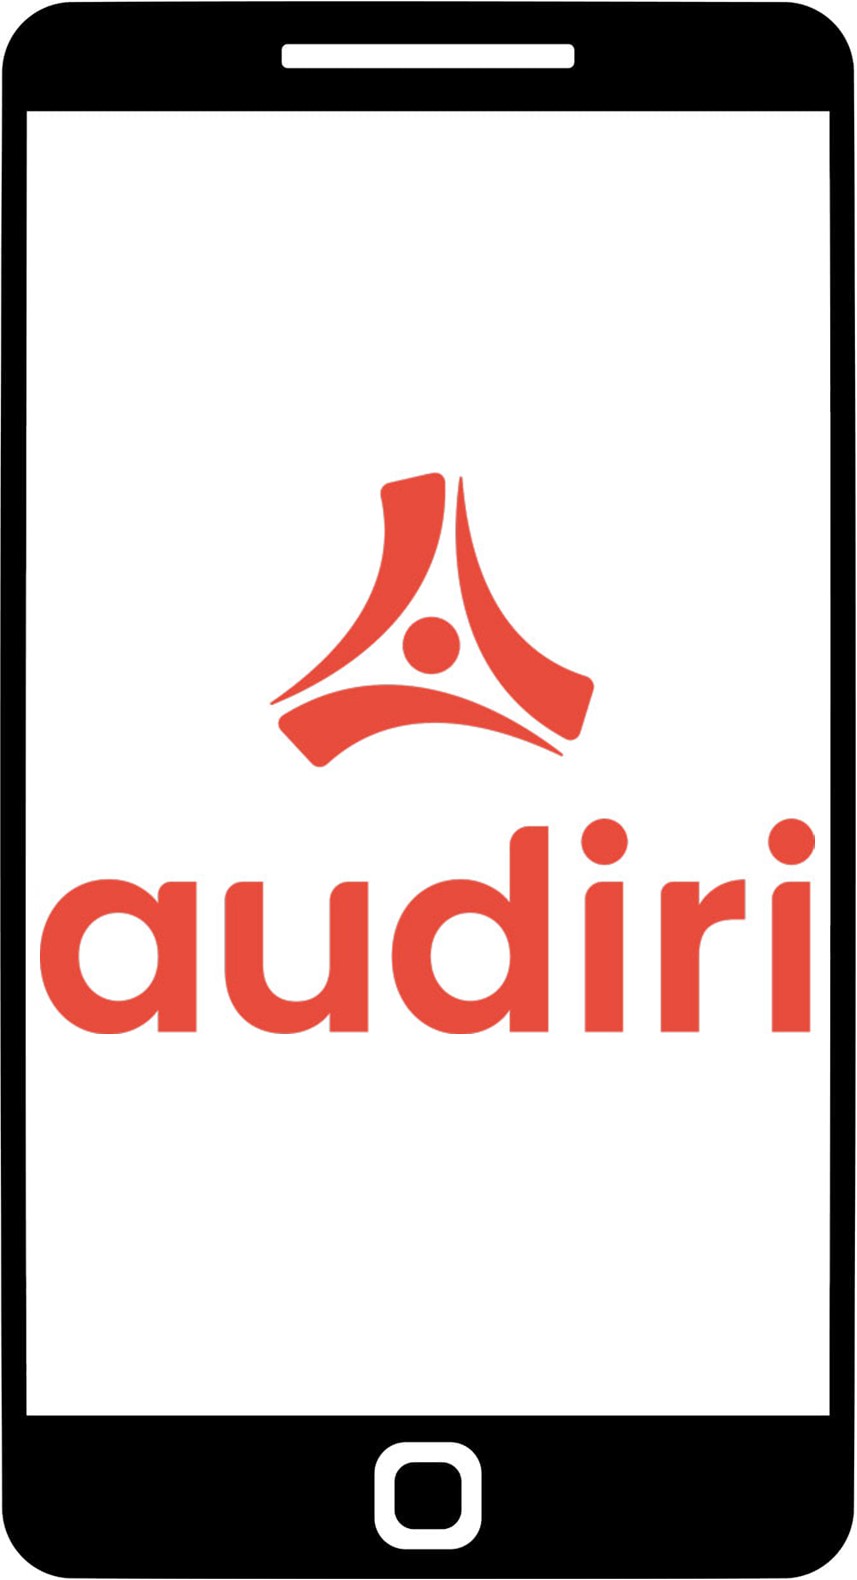 Audiri logo on a mobile screen.